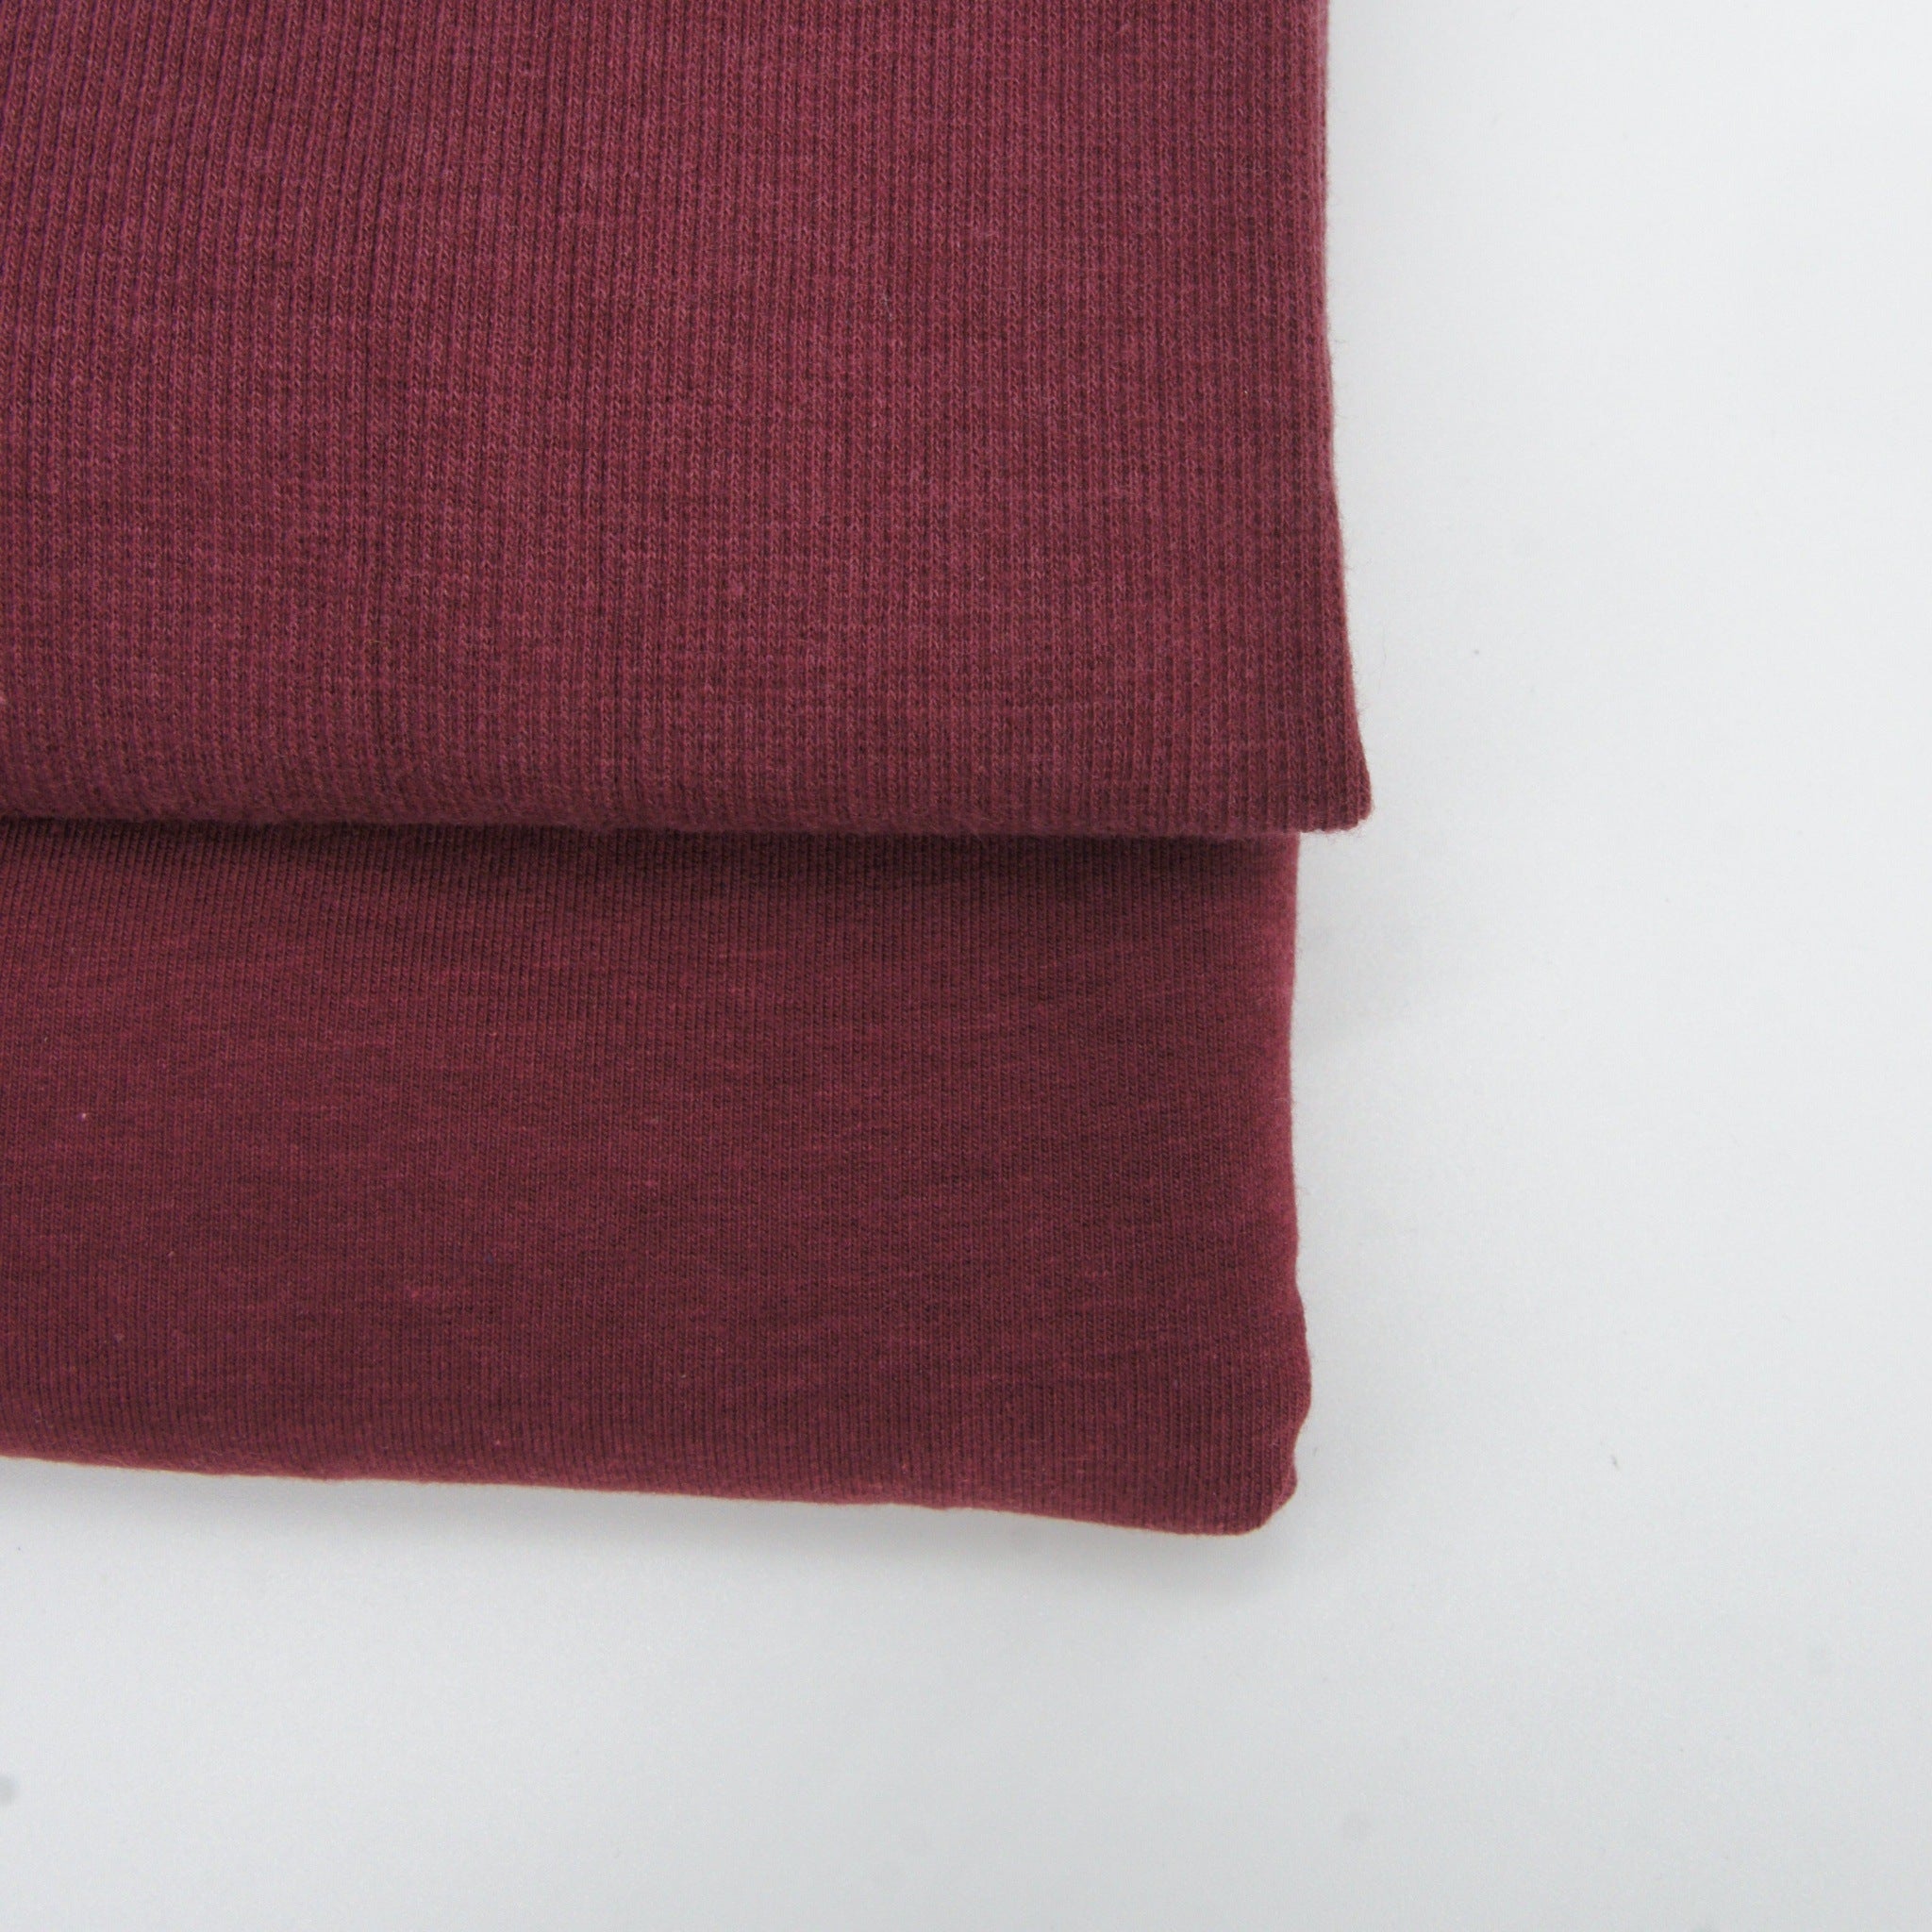 Tencel Organic Cotton Spandex 2x2 Rib Knit - Heretic